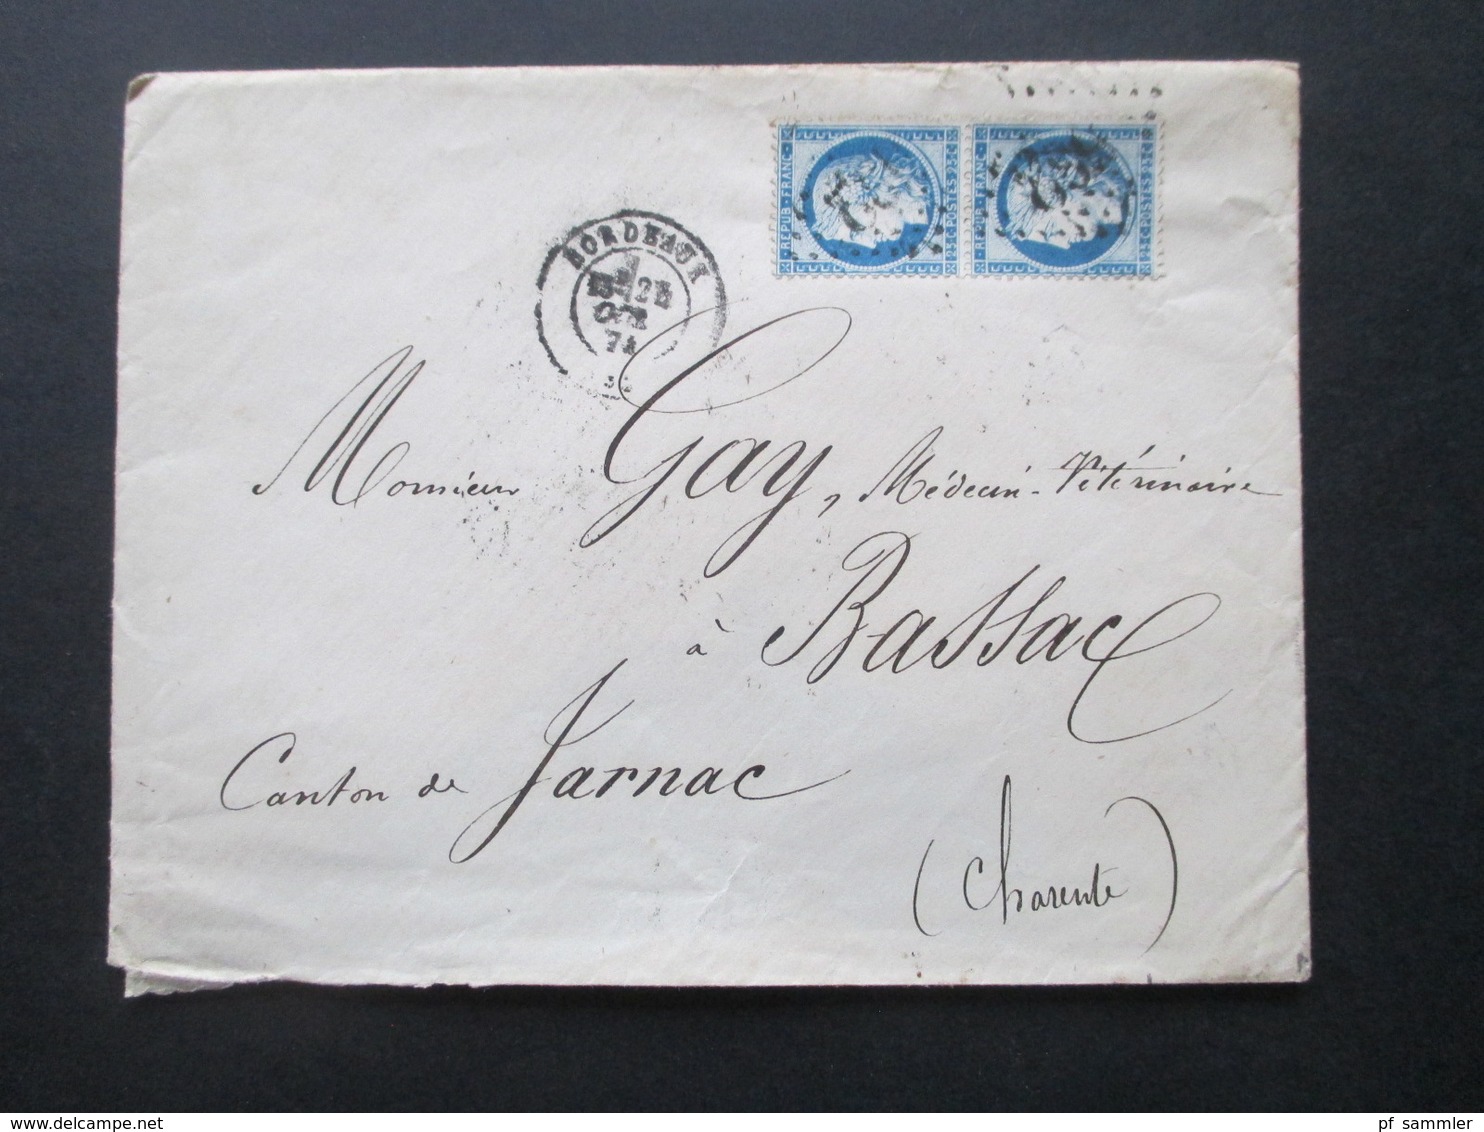 Frankreich 1874 Ceres Nr. 51 MeF Nummernstempel Bordeaux Nach Bassac Canton De Jarnac Charante Mit Inhalt!! - 1871-1875 Cérès